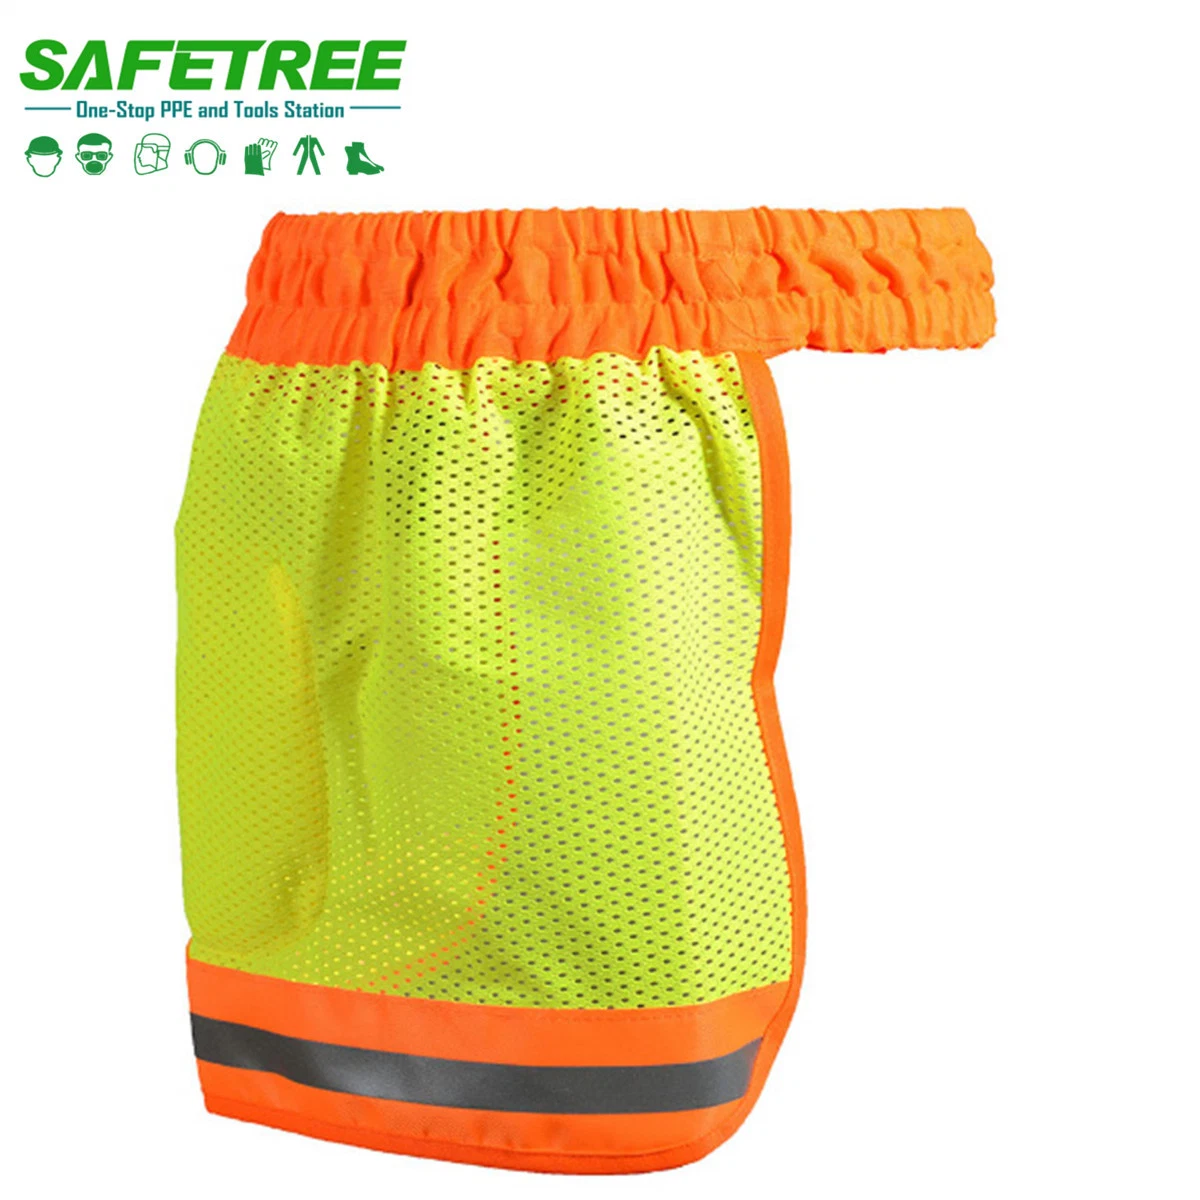 Safetree High Vis Reflective Amarillo/Naranja Casco cobertura cuello Casco cubierta Casco de casco de la cubierta de la brim cubierta del cuello